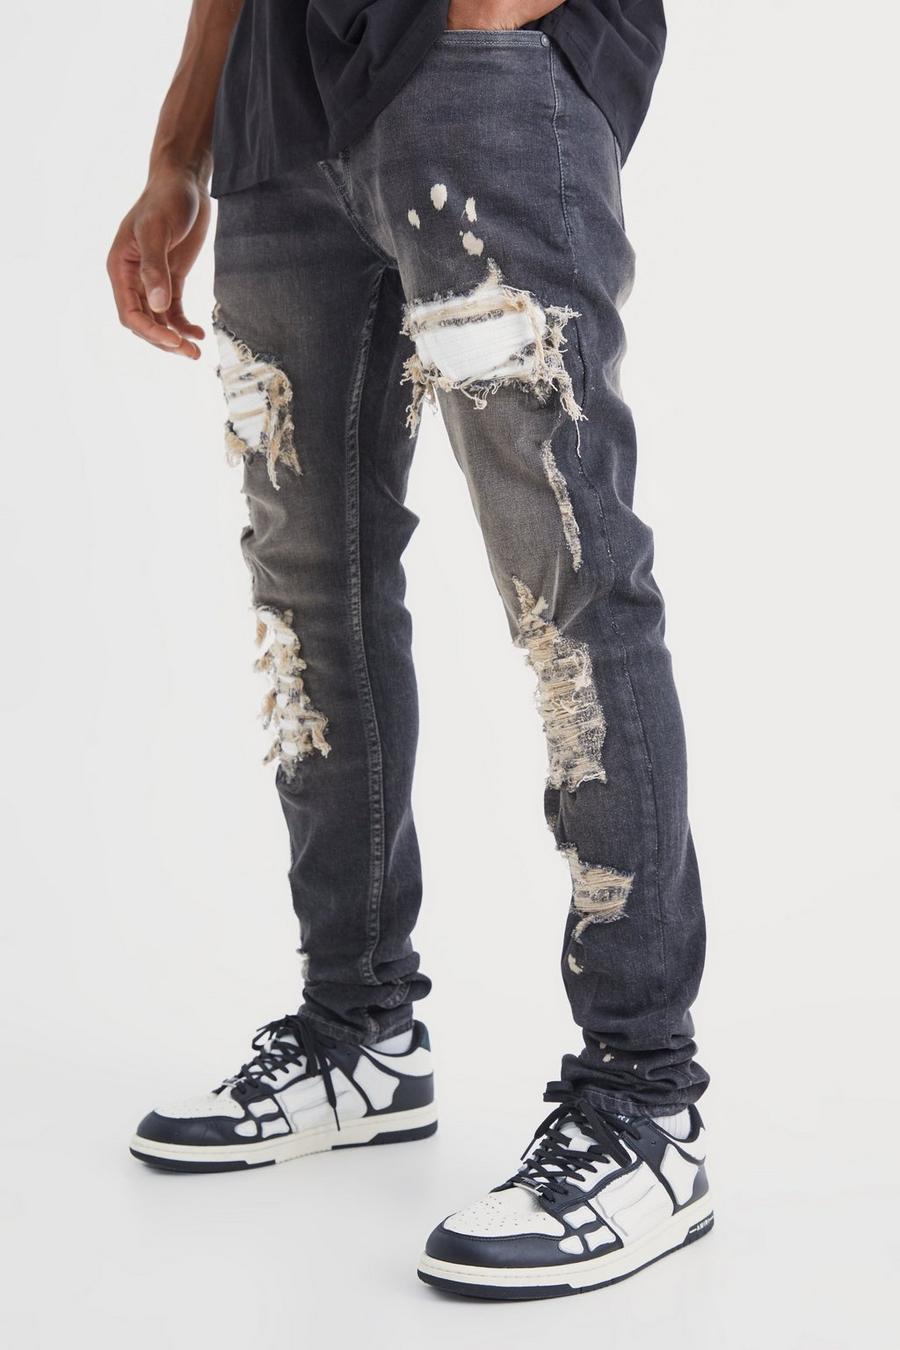 High-quality Men Fashion Distressed Ripped Skinny Jeans Slim Fit Motorcycle  Moto Biker Jeans Elastic Denim Hip hop Punk Jeans